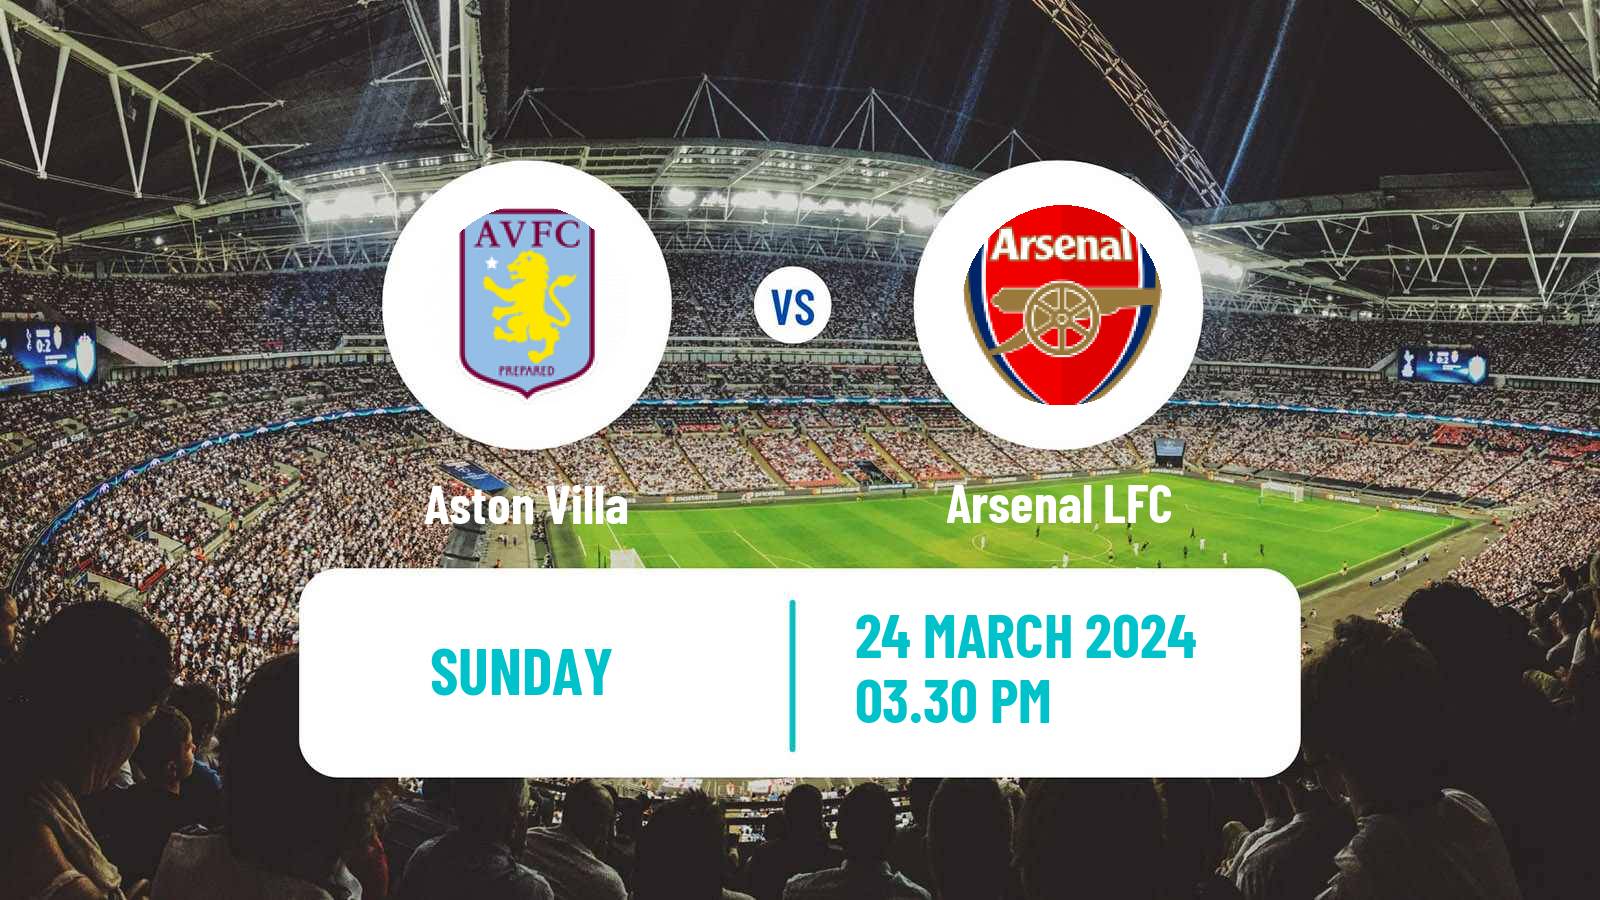 Soccer English WSL Aston Villa - Arsenal LFC